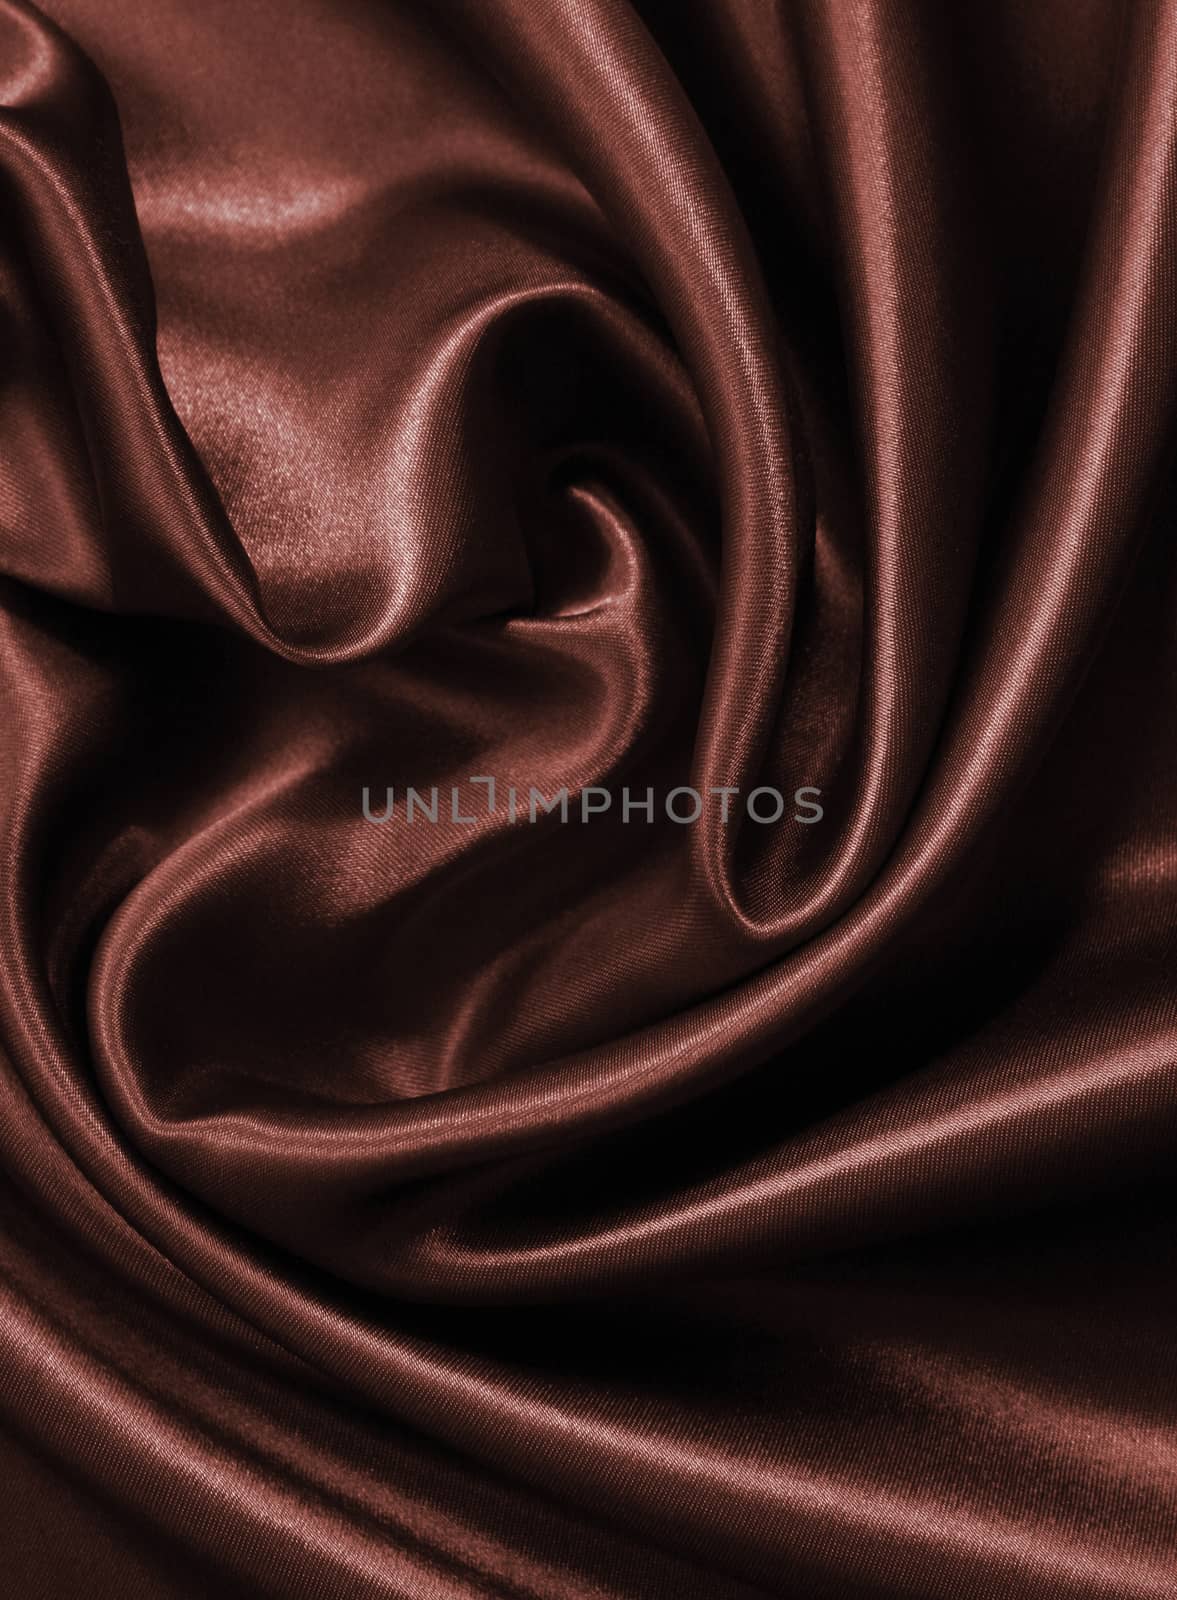 Smooth elegant dark brown chocolate silk can use as background